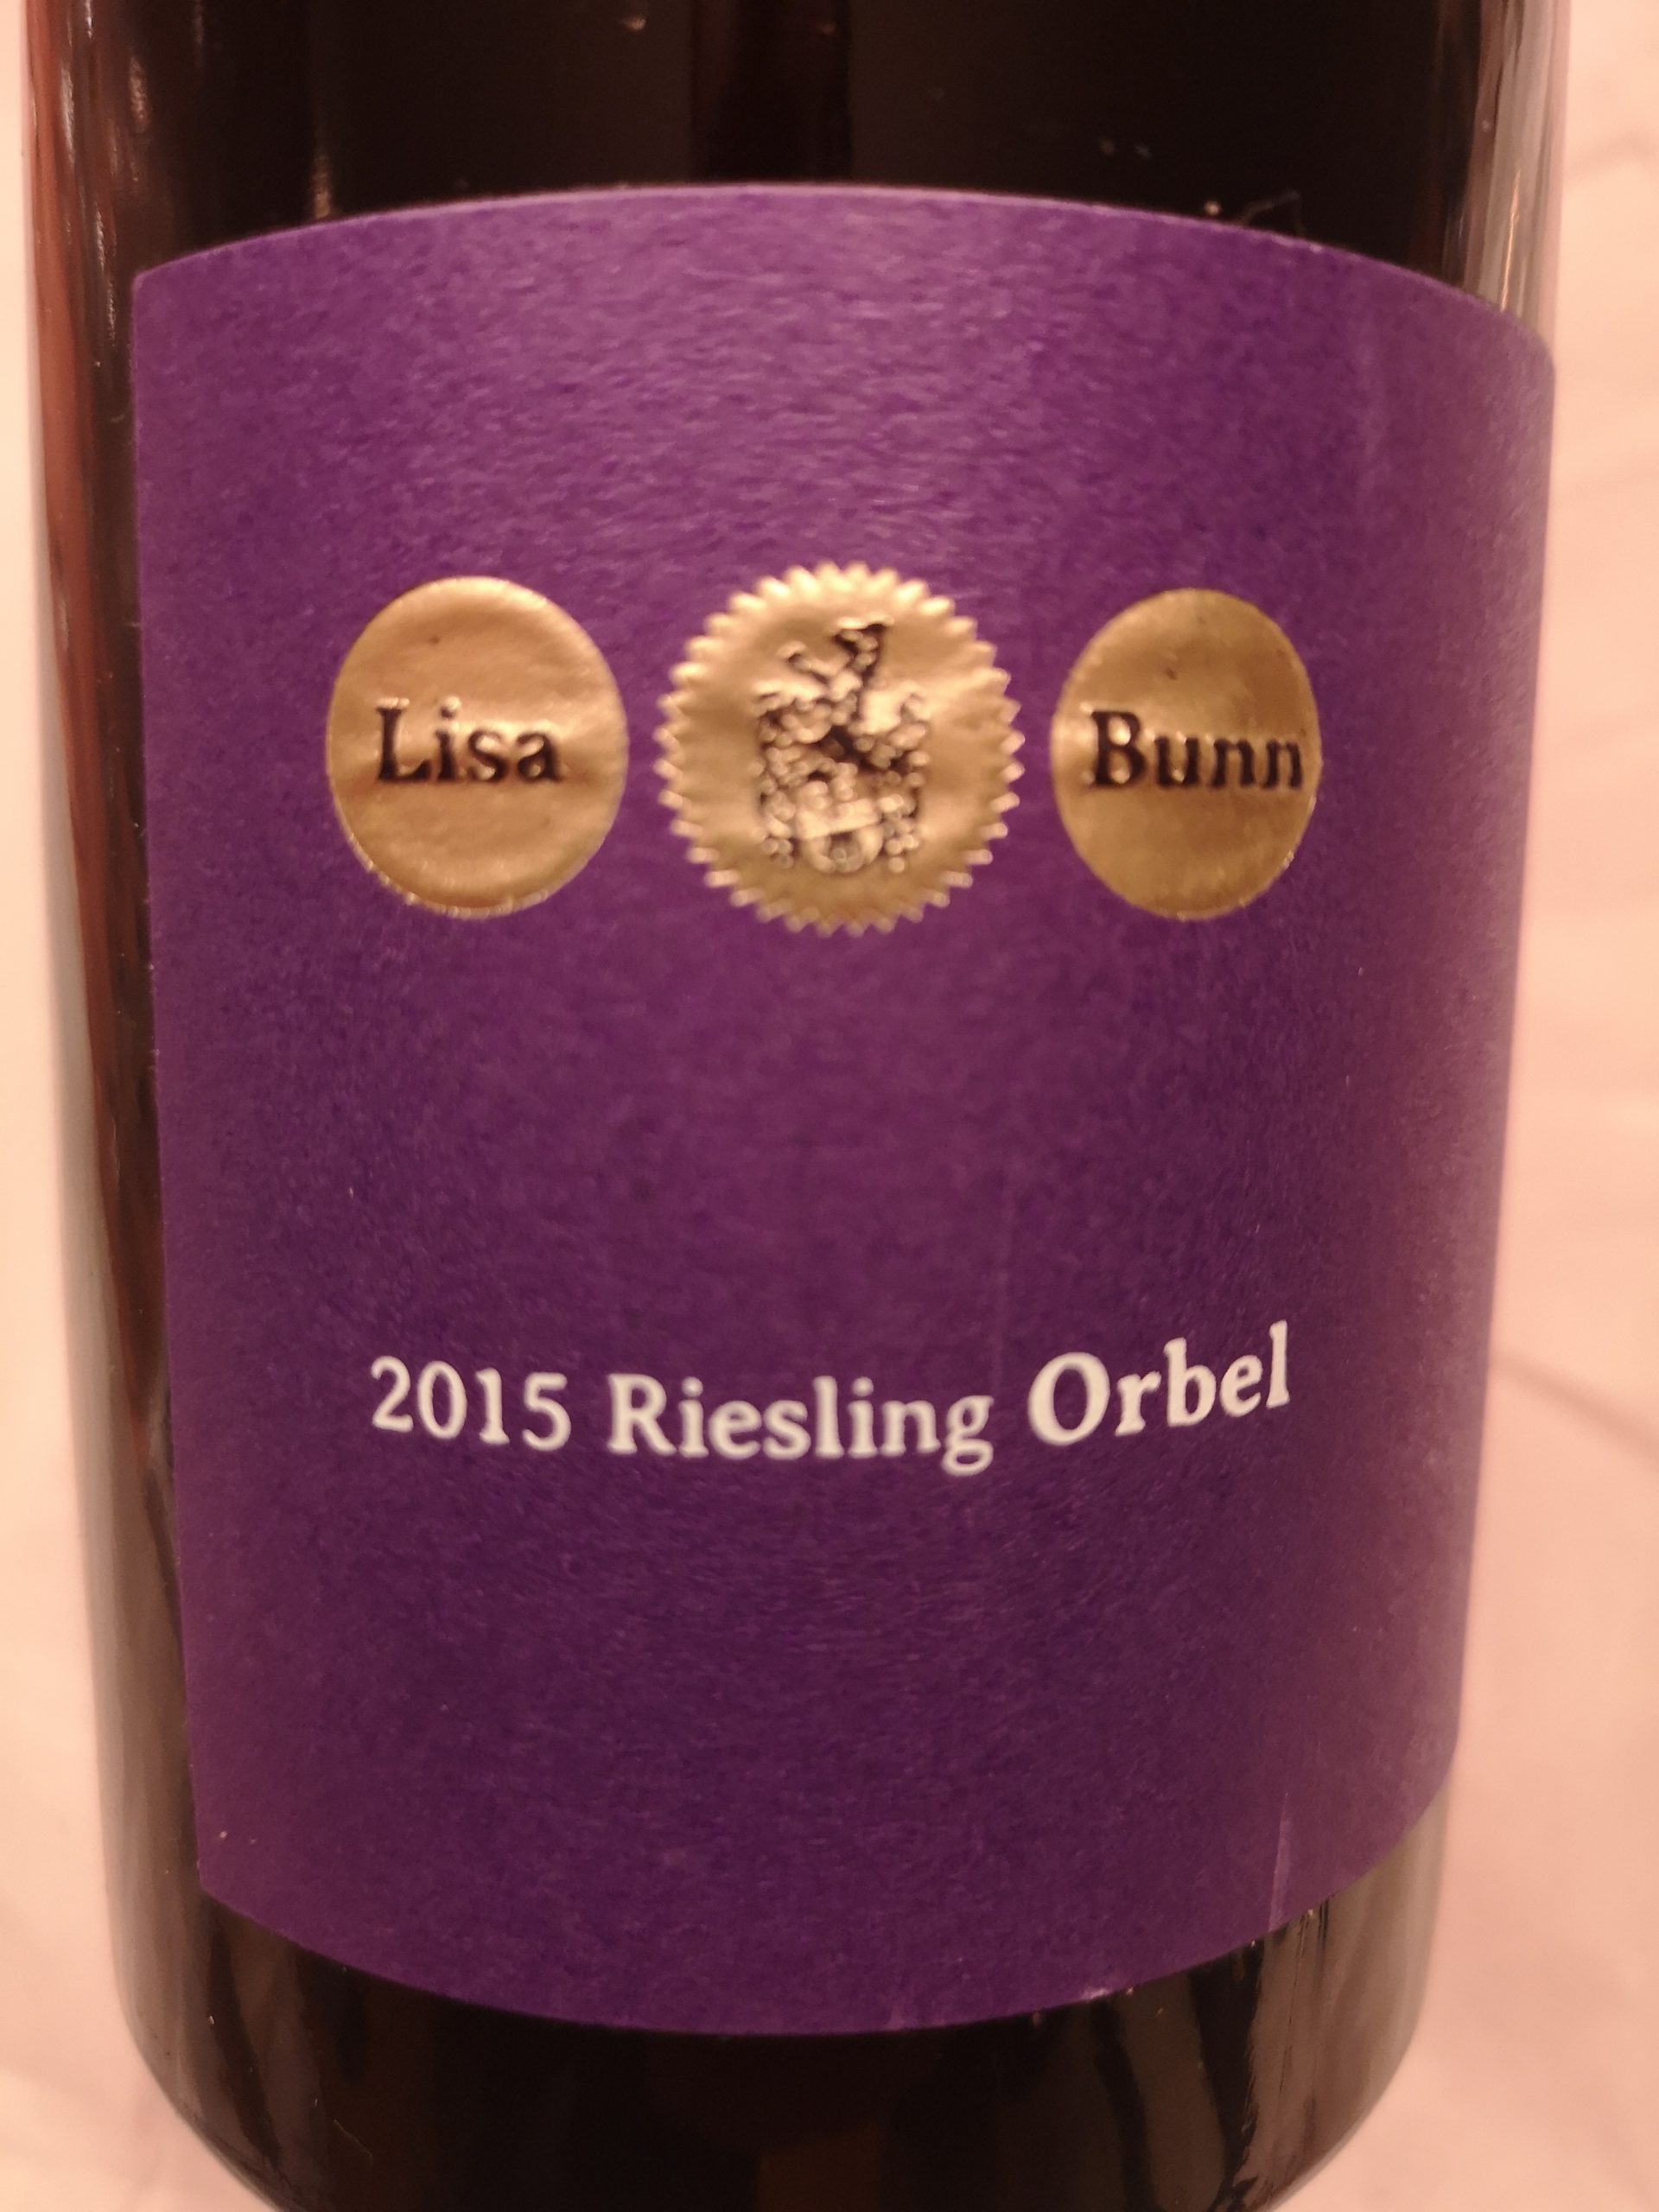 2015 Riesling Orbel | Lisa Bunn